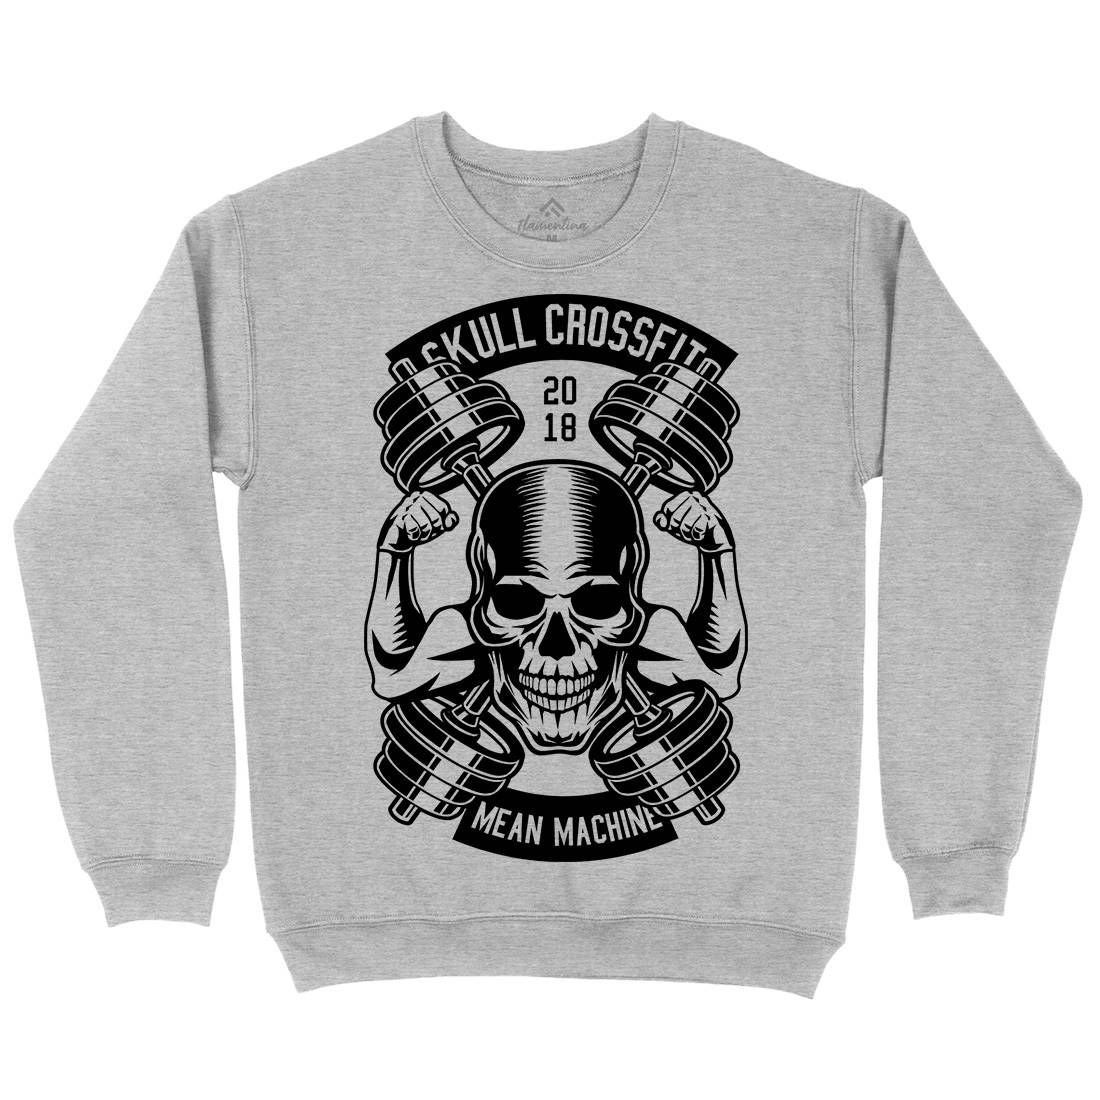 Skull Cross Fit Kids Crew Neck Sweatshirt Gym B627